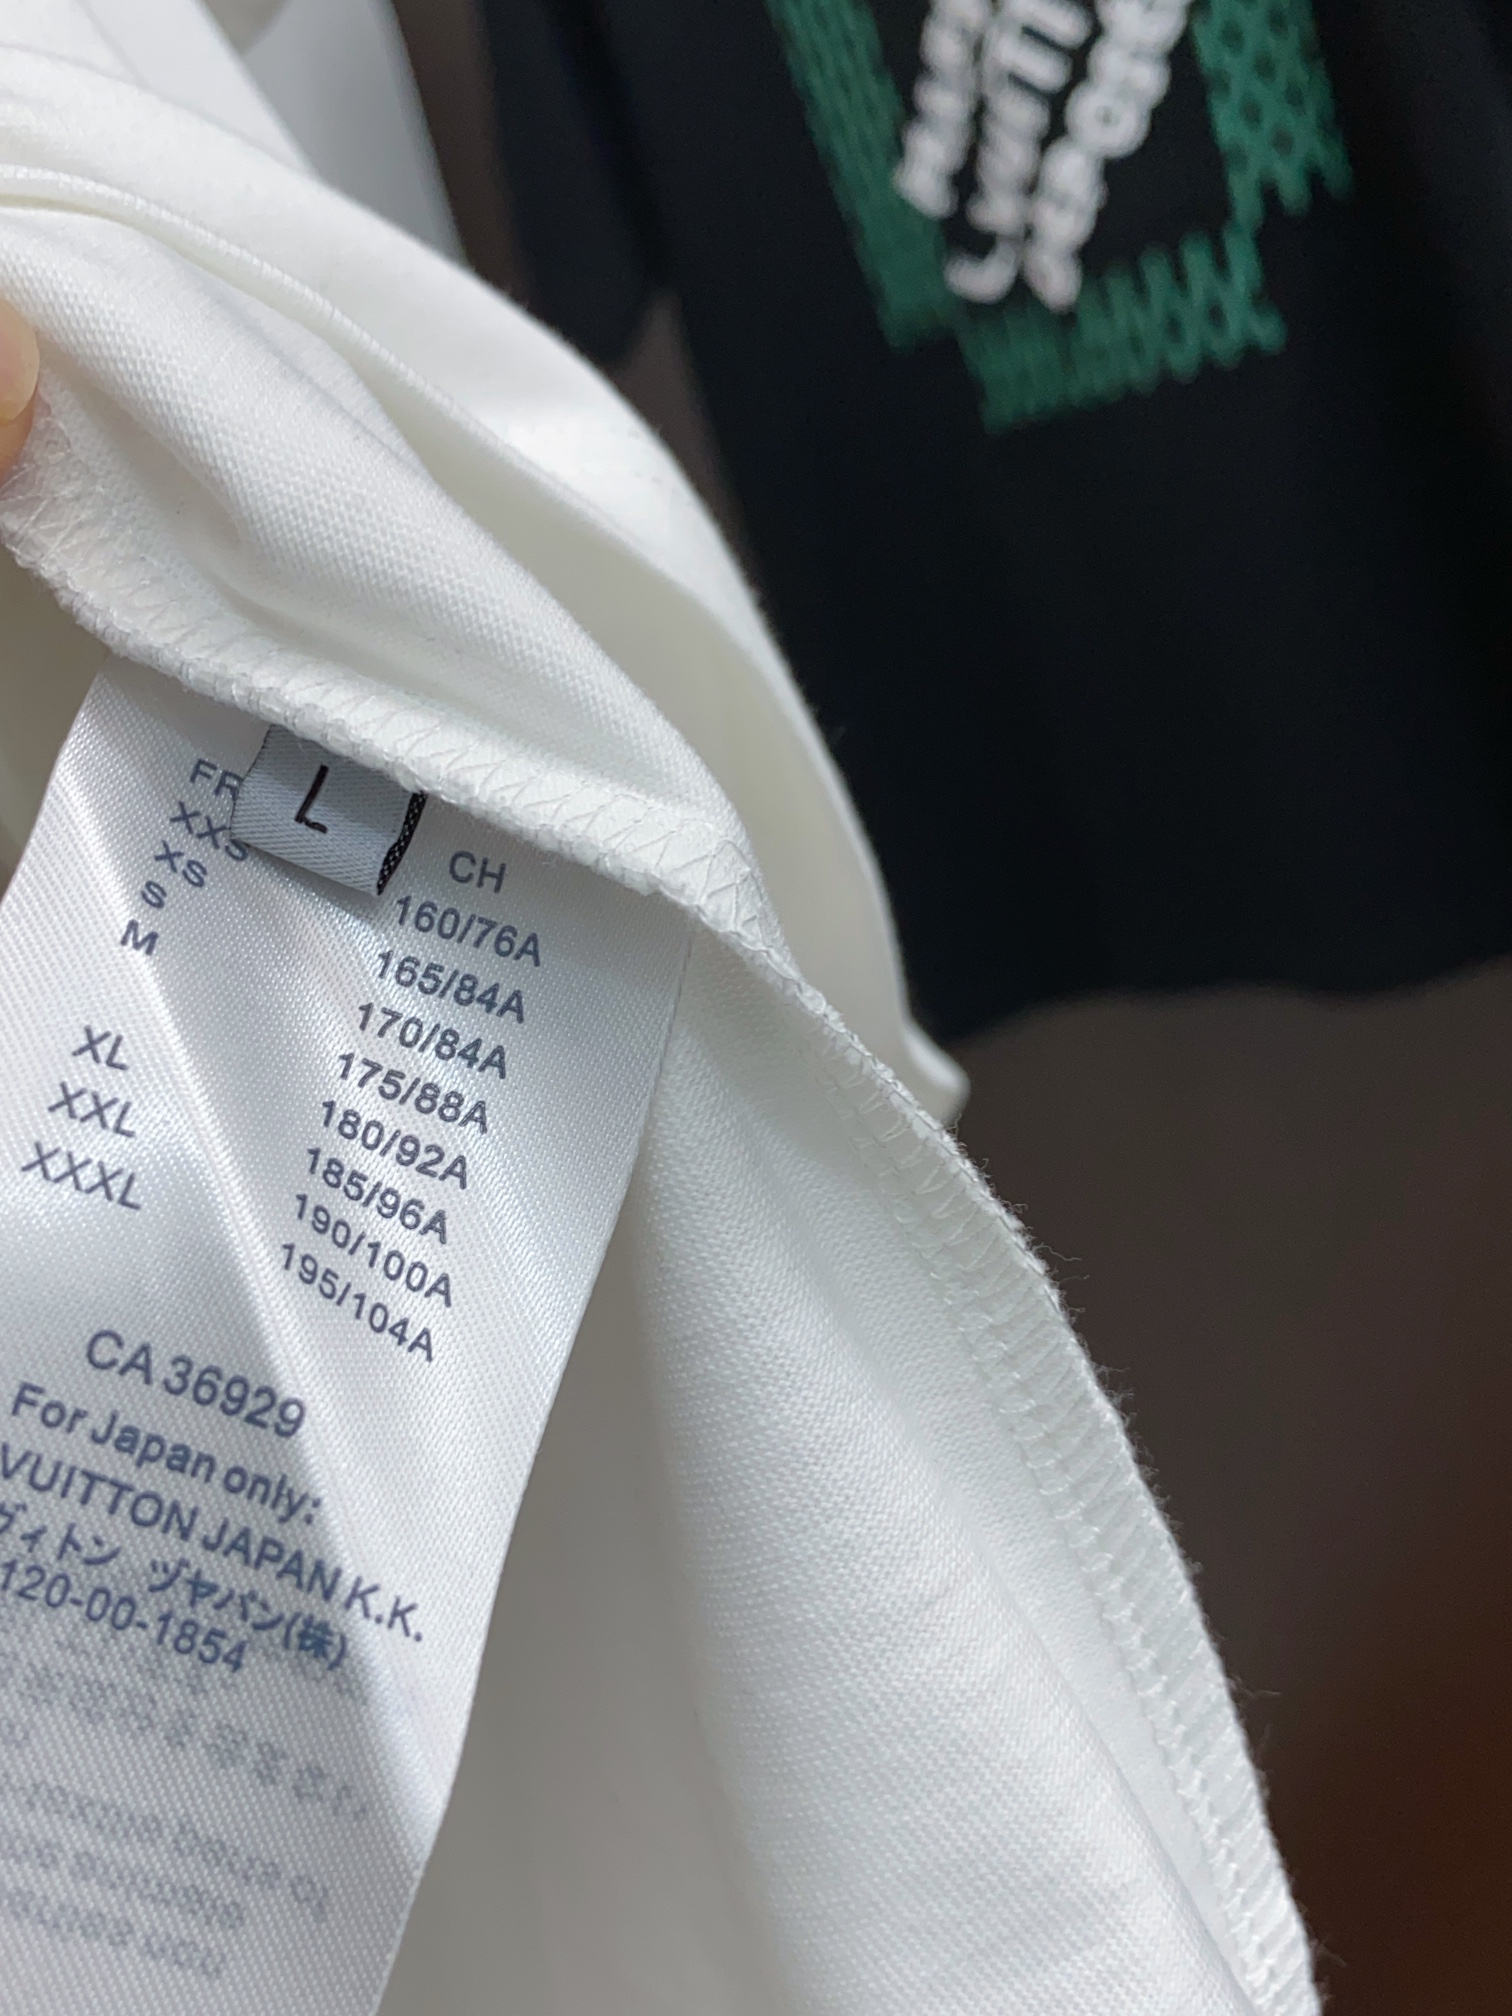 v路易威登合身版型M-3xL24春夏早春新款短袖T恤顶级制作工艺进口纯棉面料手感细腻每个字母饱满立体清晰